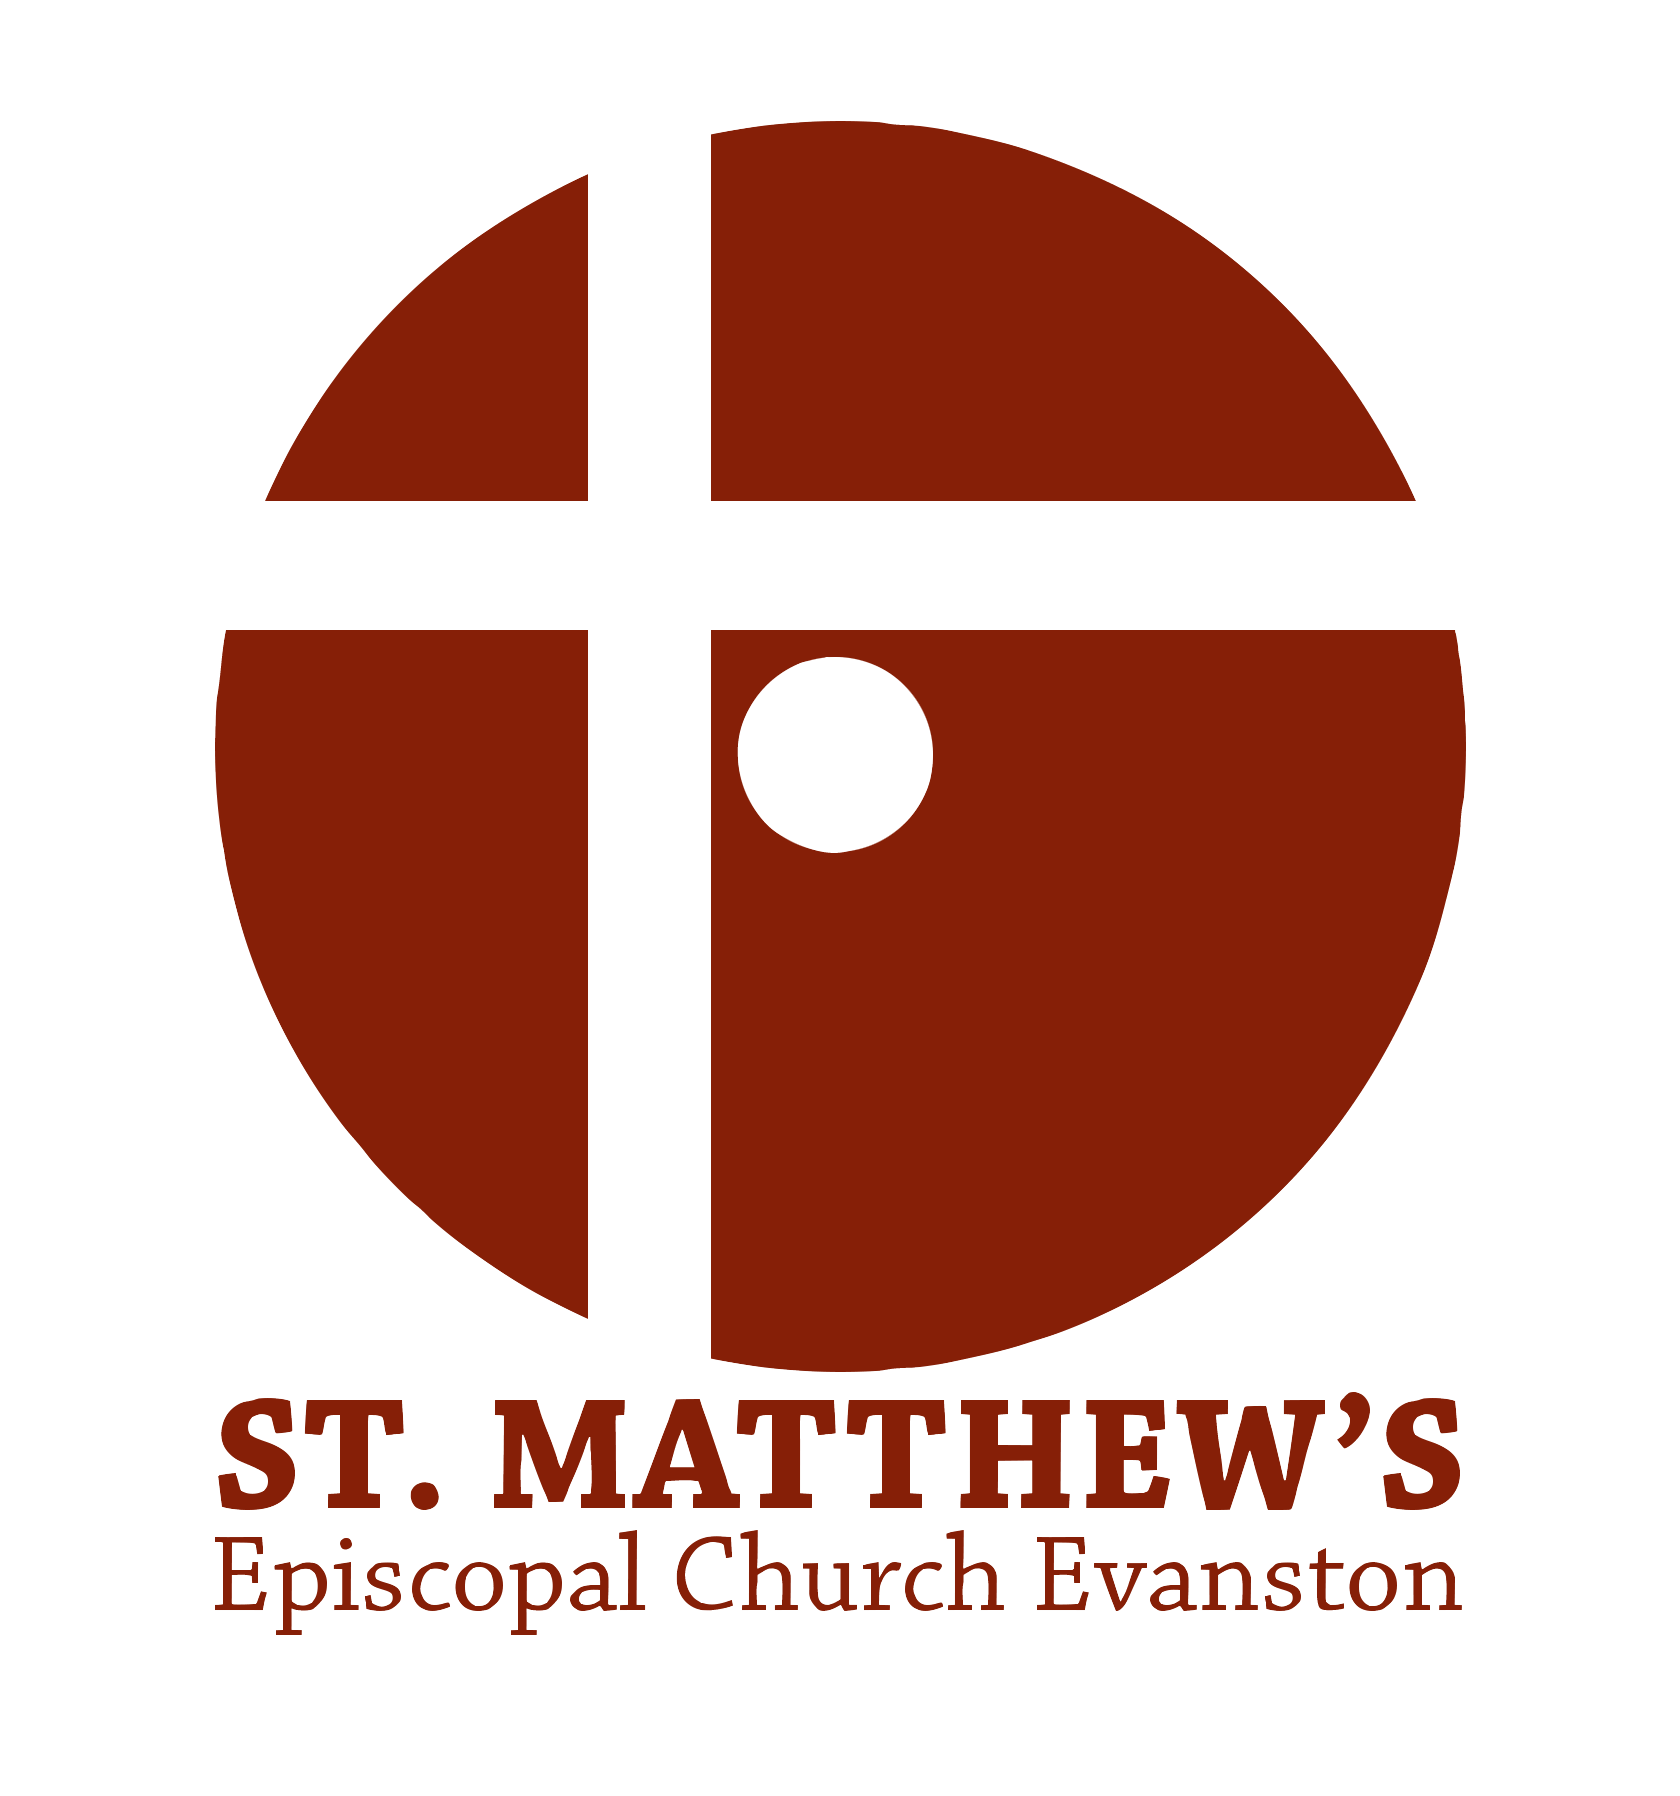 St. Matthews logo